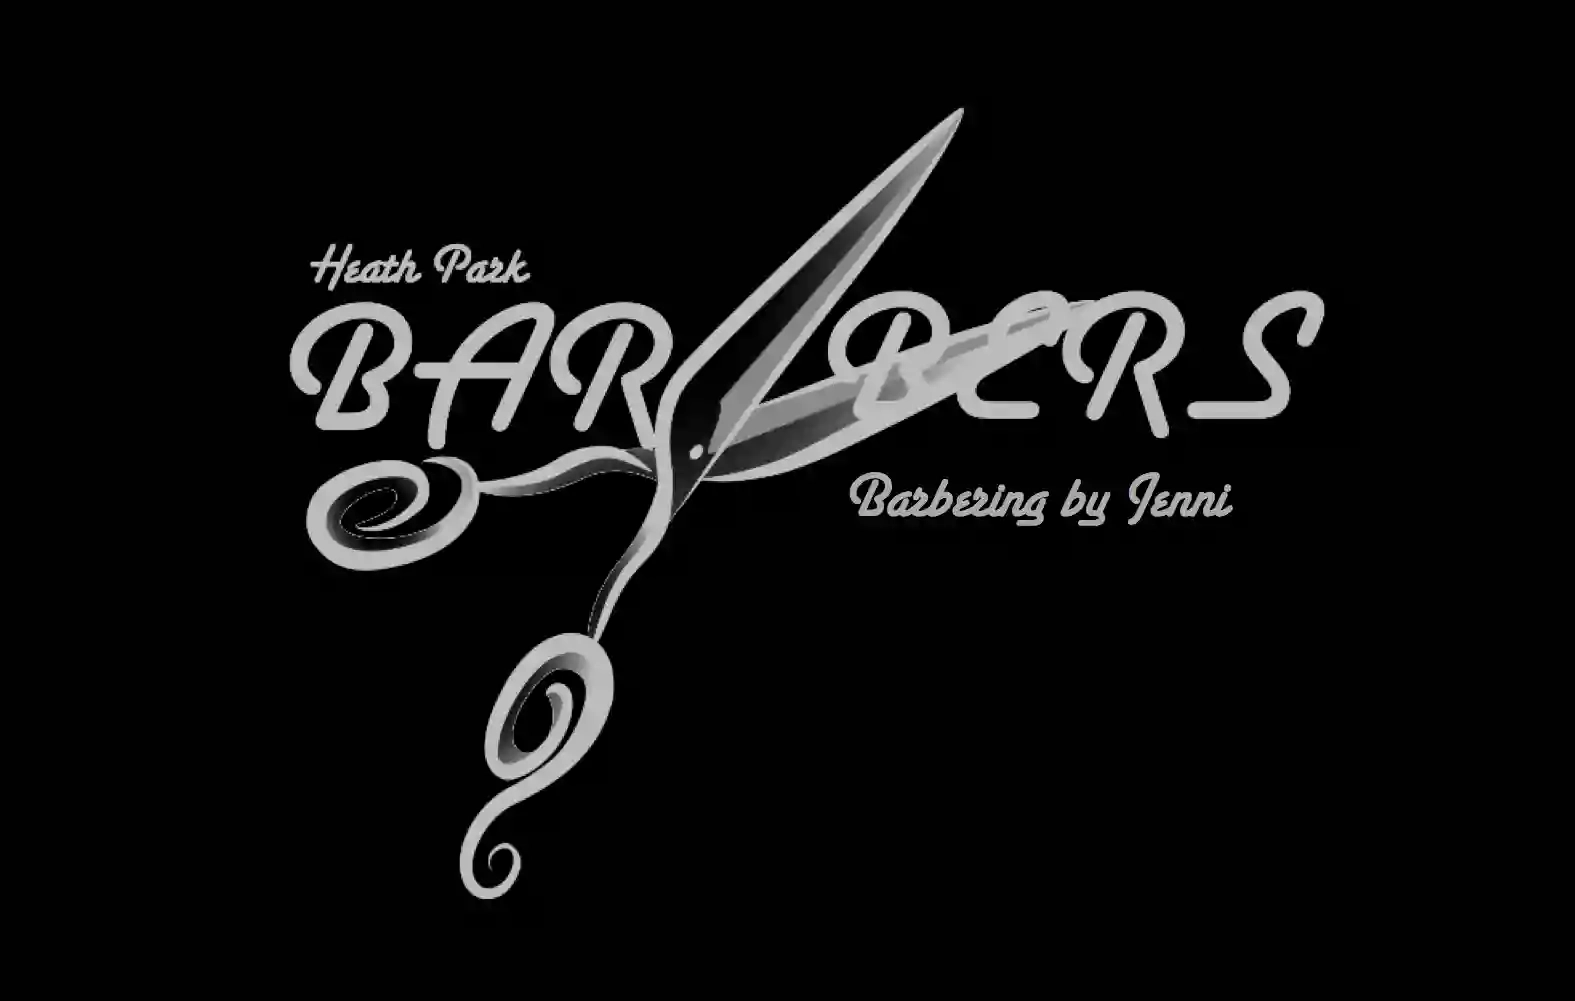 Heath Park Barbers